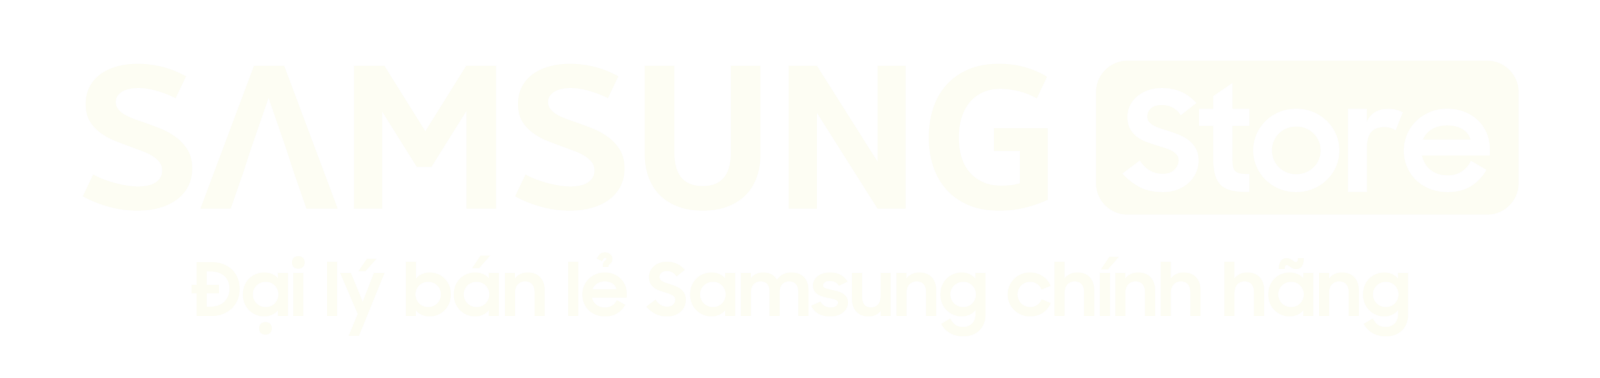 Samsung Store - Ngọc Nguyễn Retail JSC